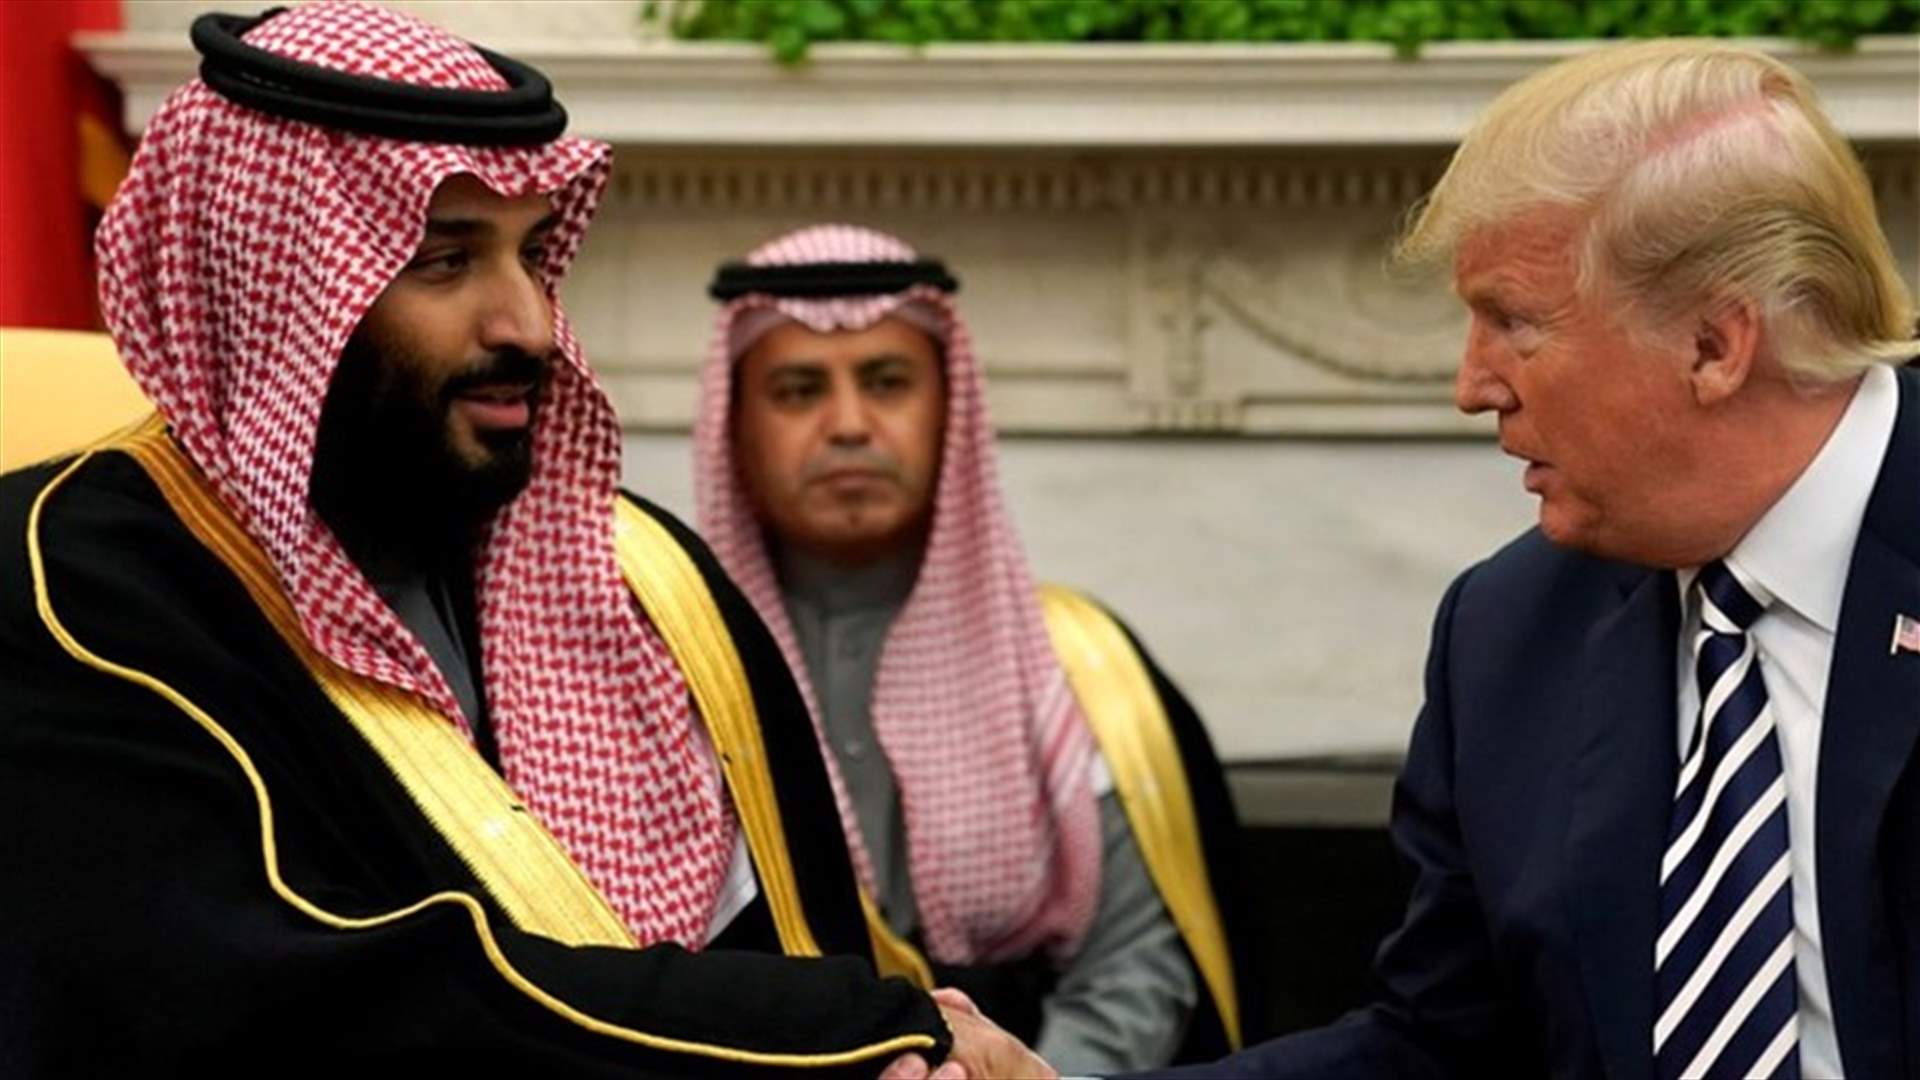 Trump says he will stand by Saudi Arabia despite Khashoggi murder